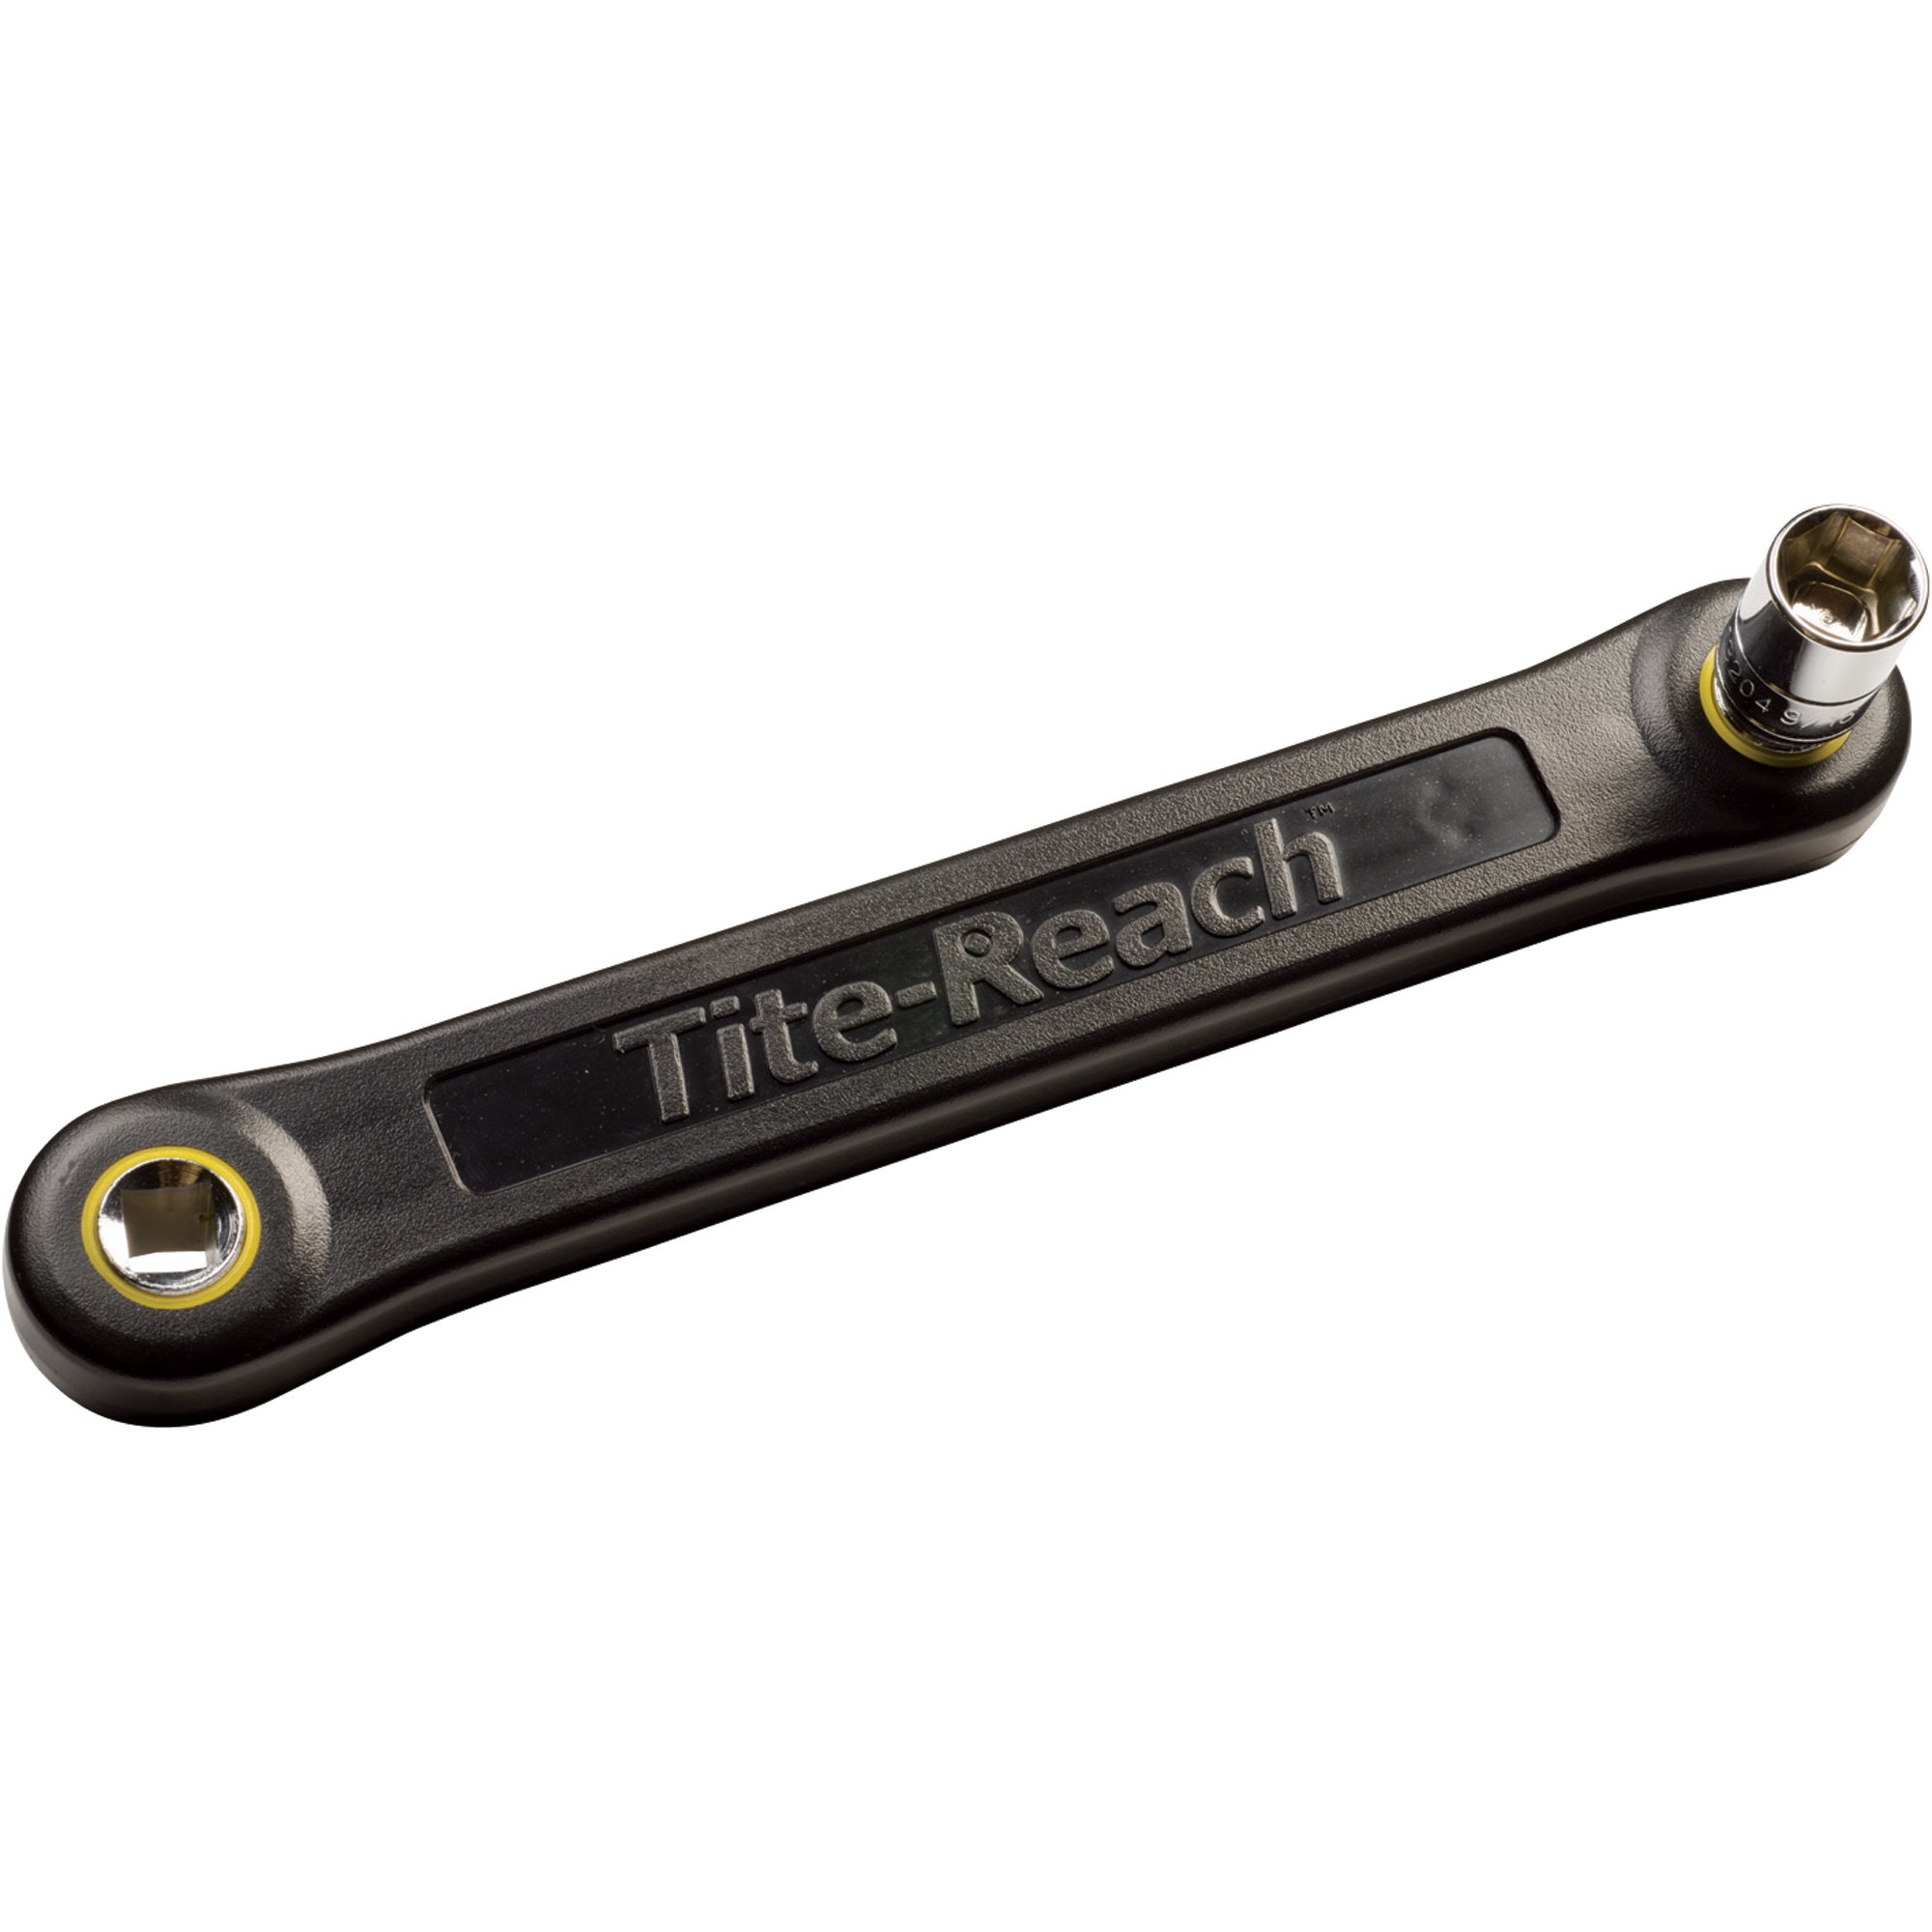 DIY Tite-Reach 3/8in. Extension Wrench, Model# TR38V1-DIY